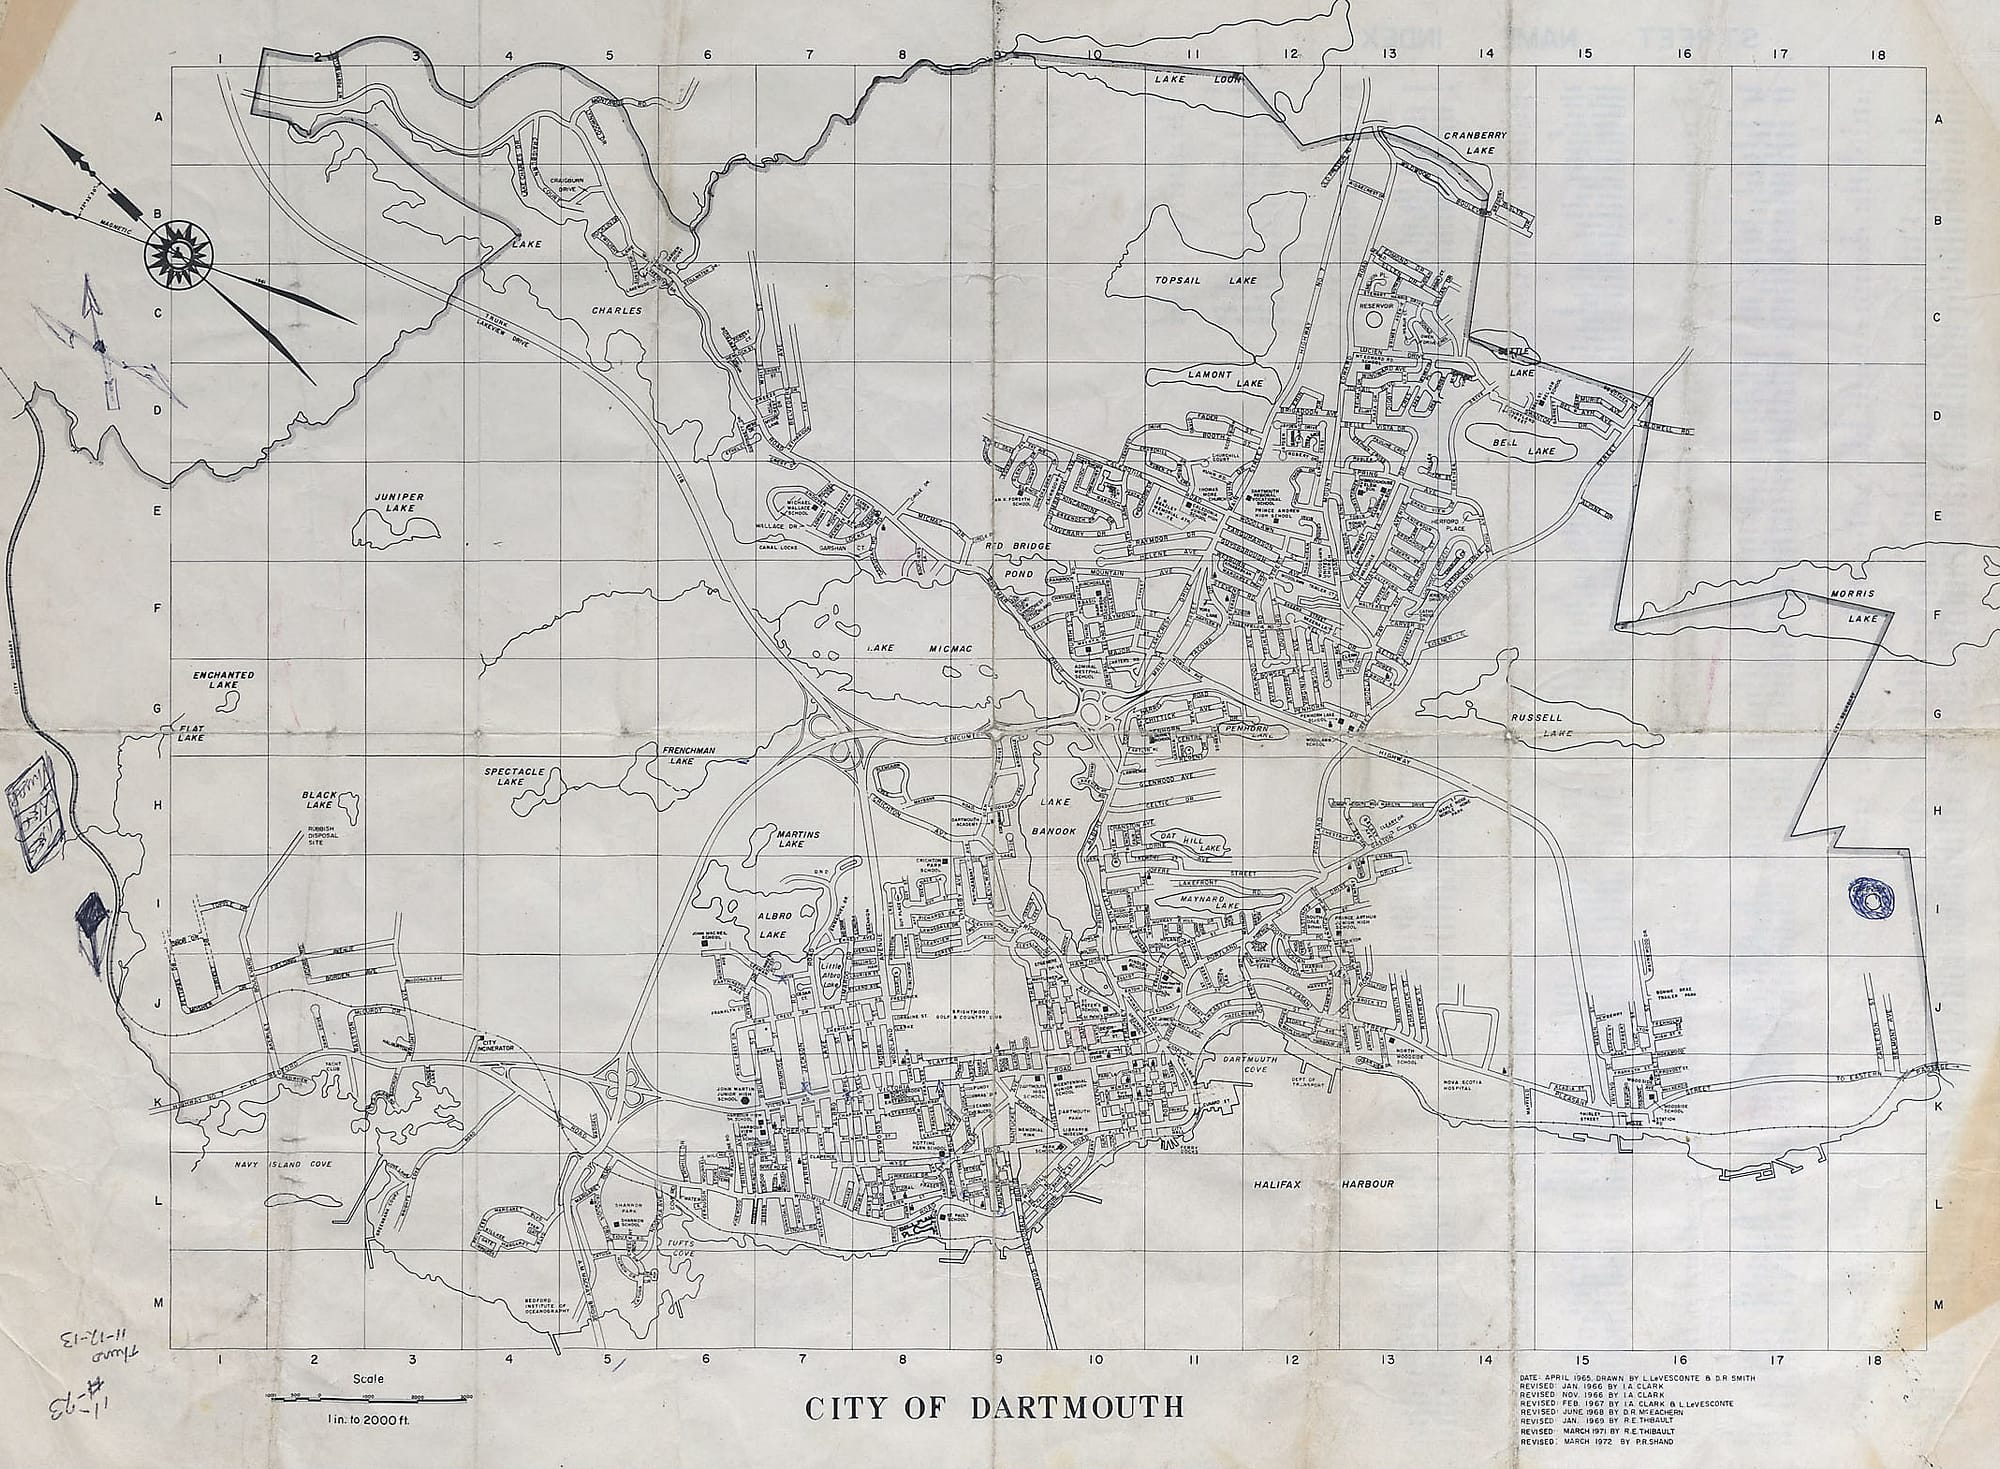 City of Dartmouth (1972)